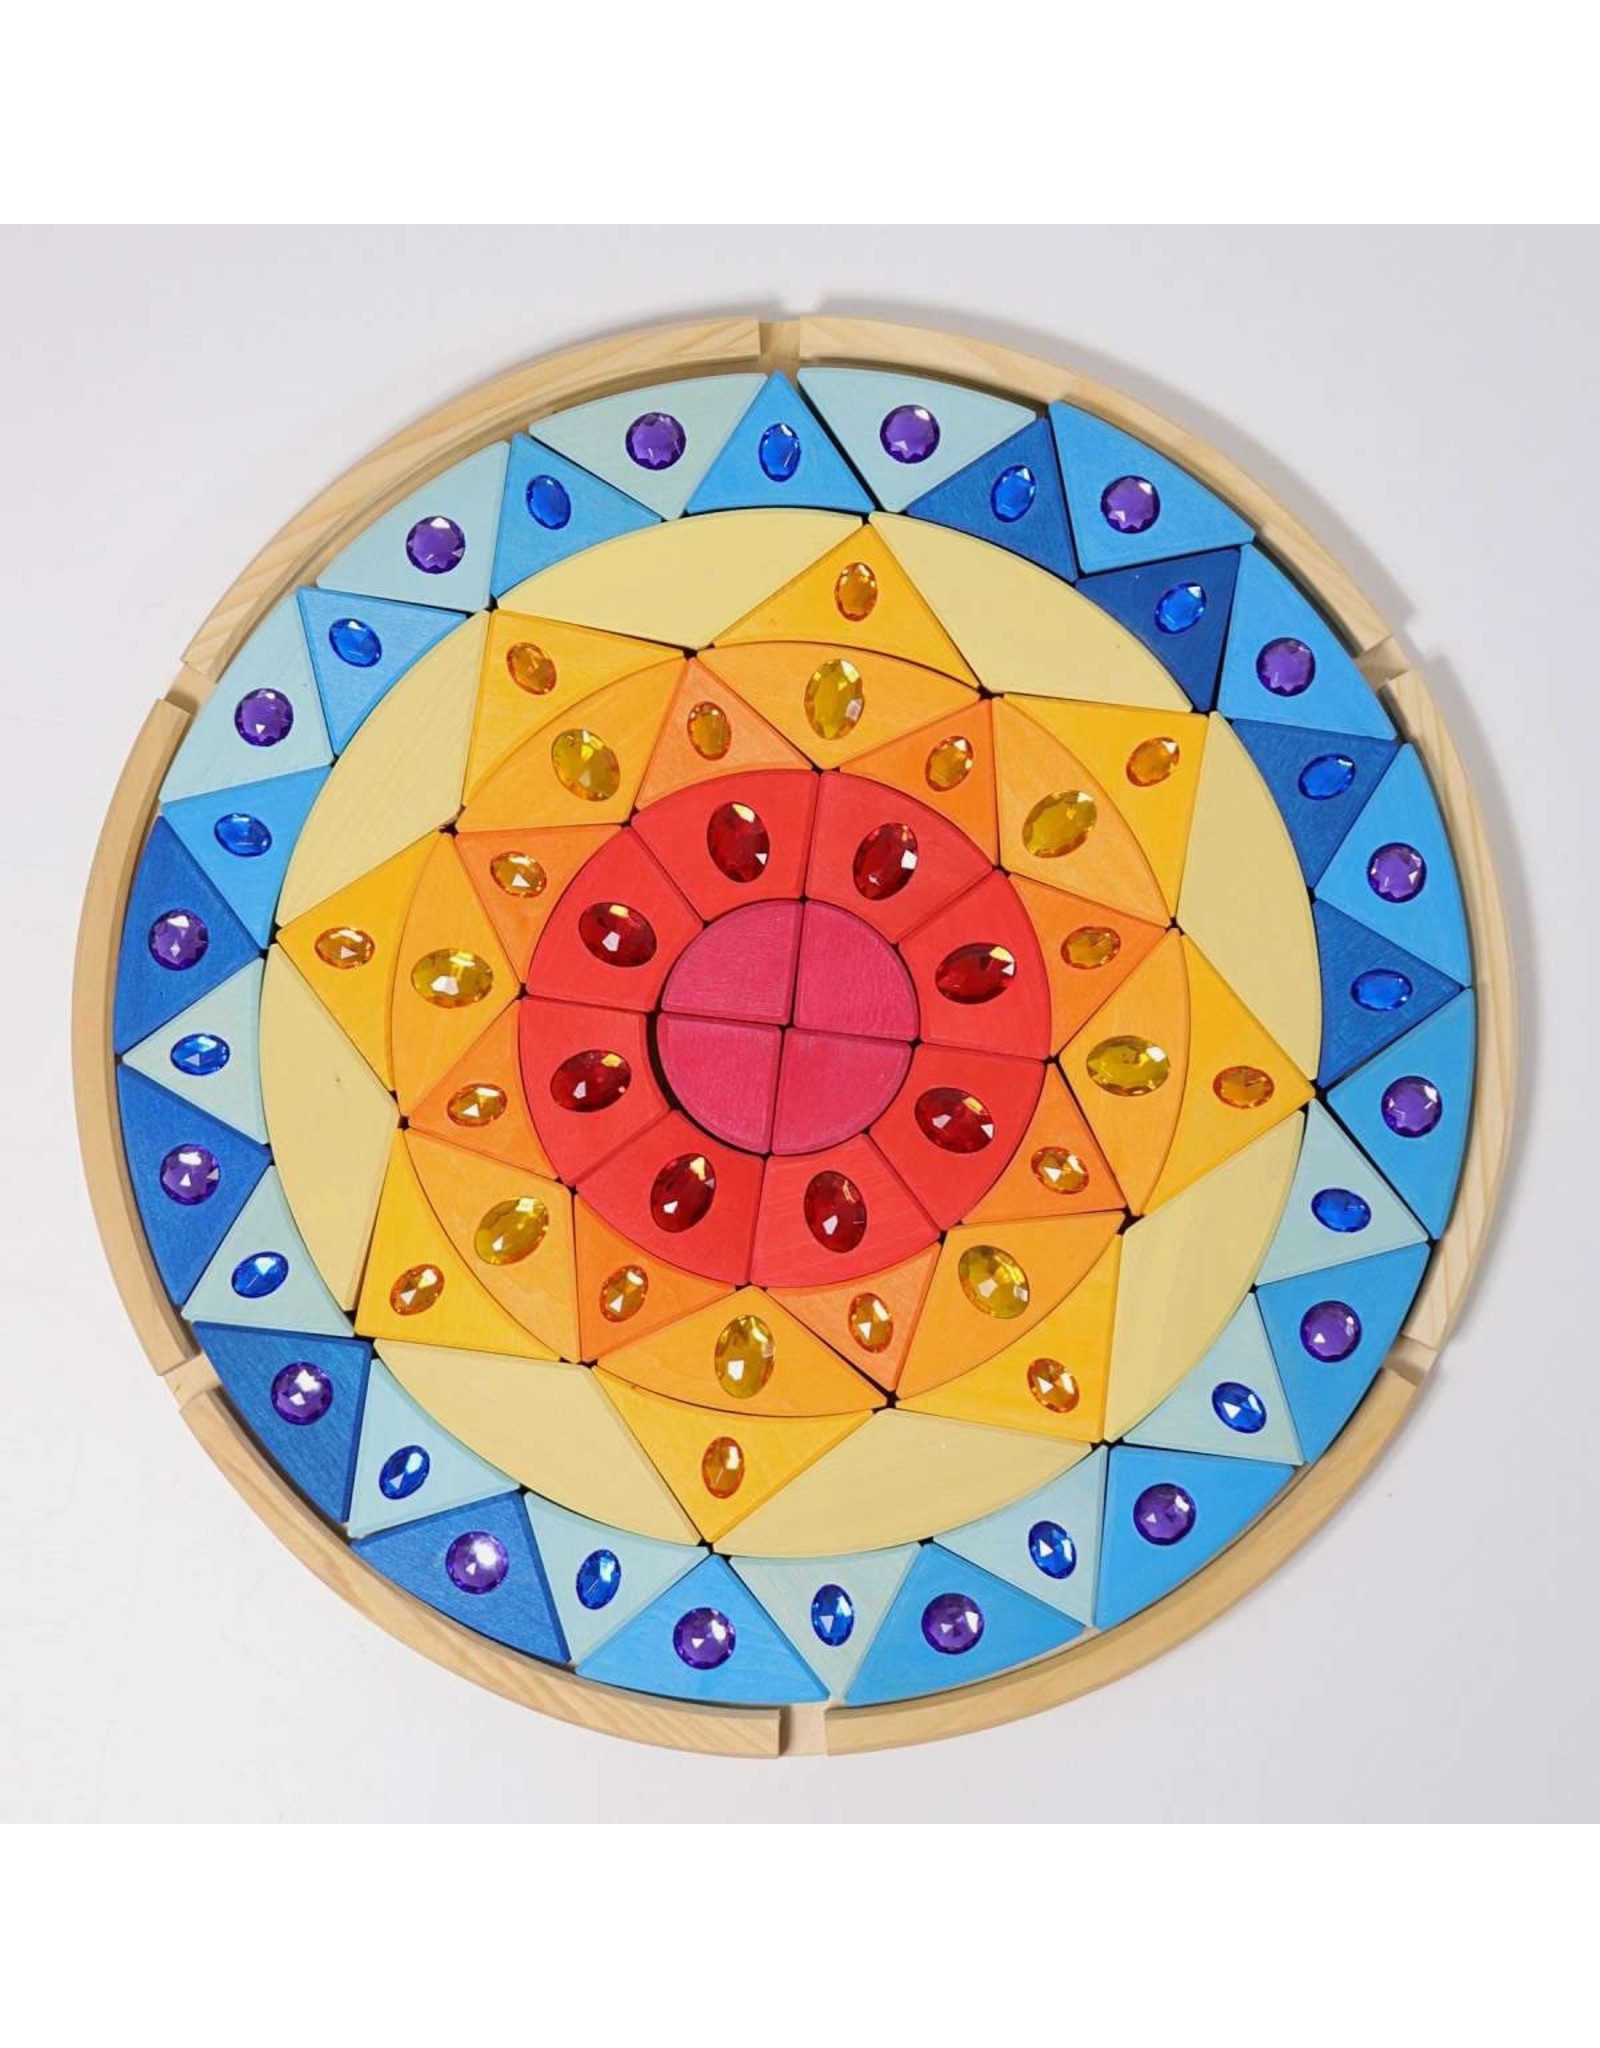 Grimm's Spiel & Holz Design Sparkling Mandala, Large Sun, 76 pcs.